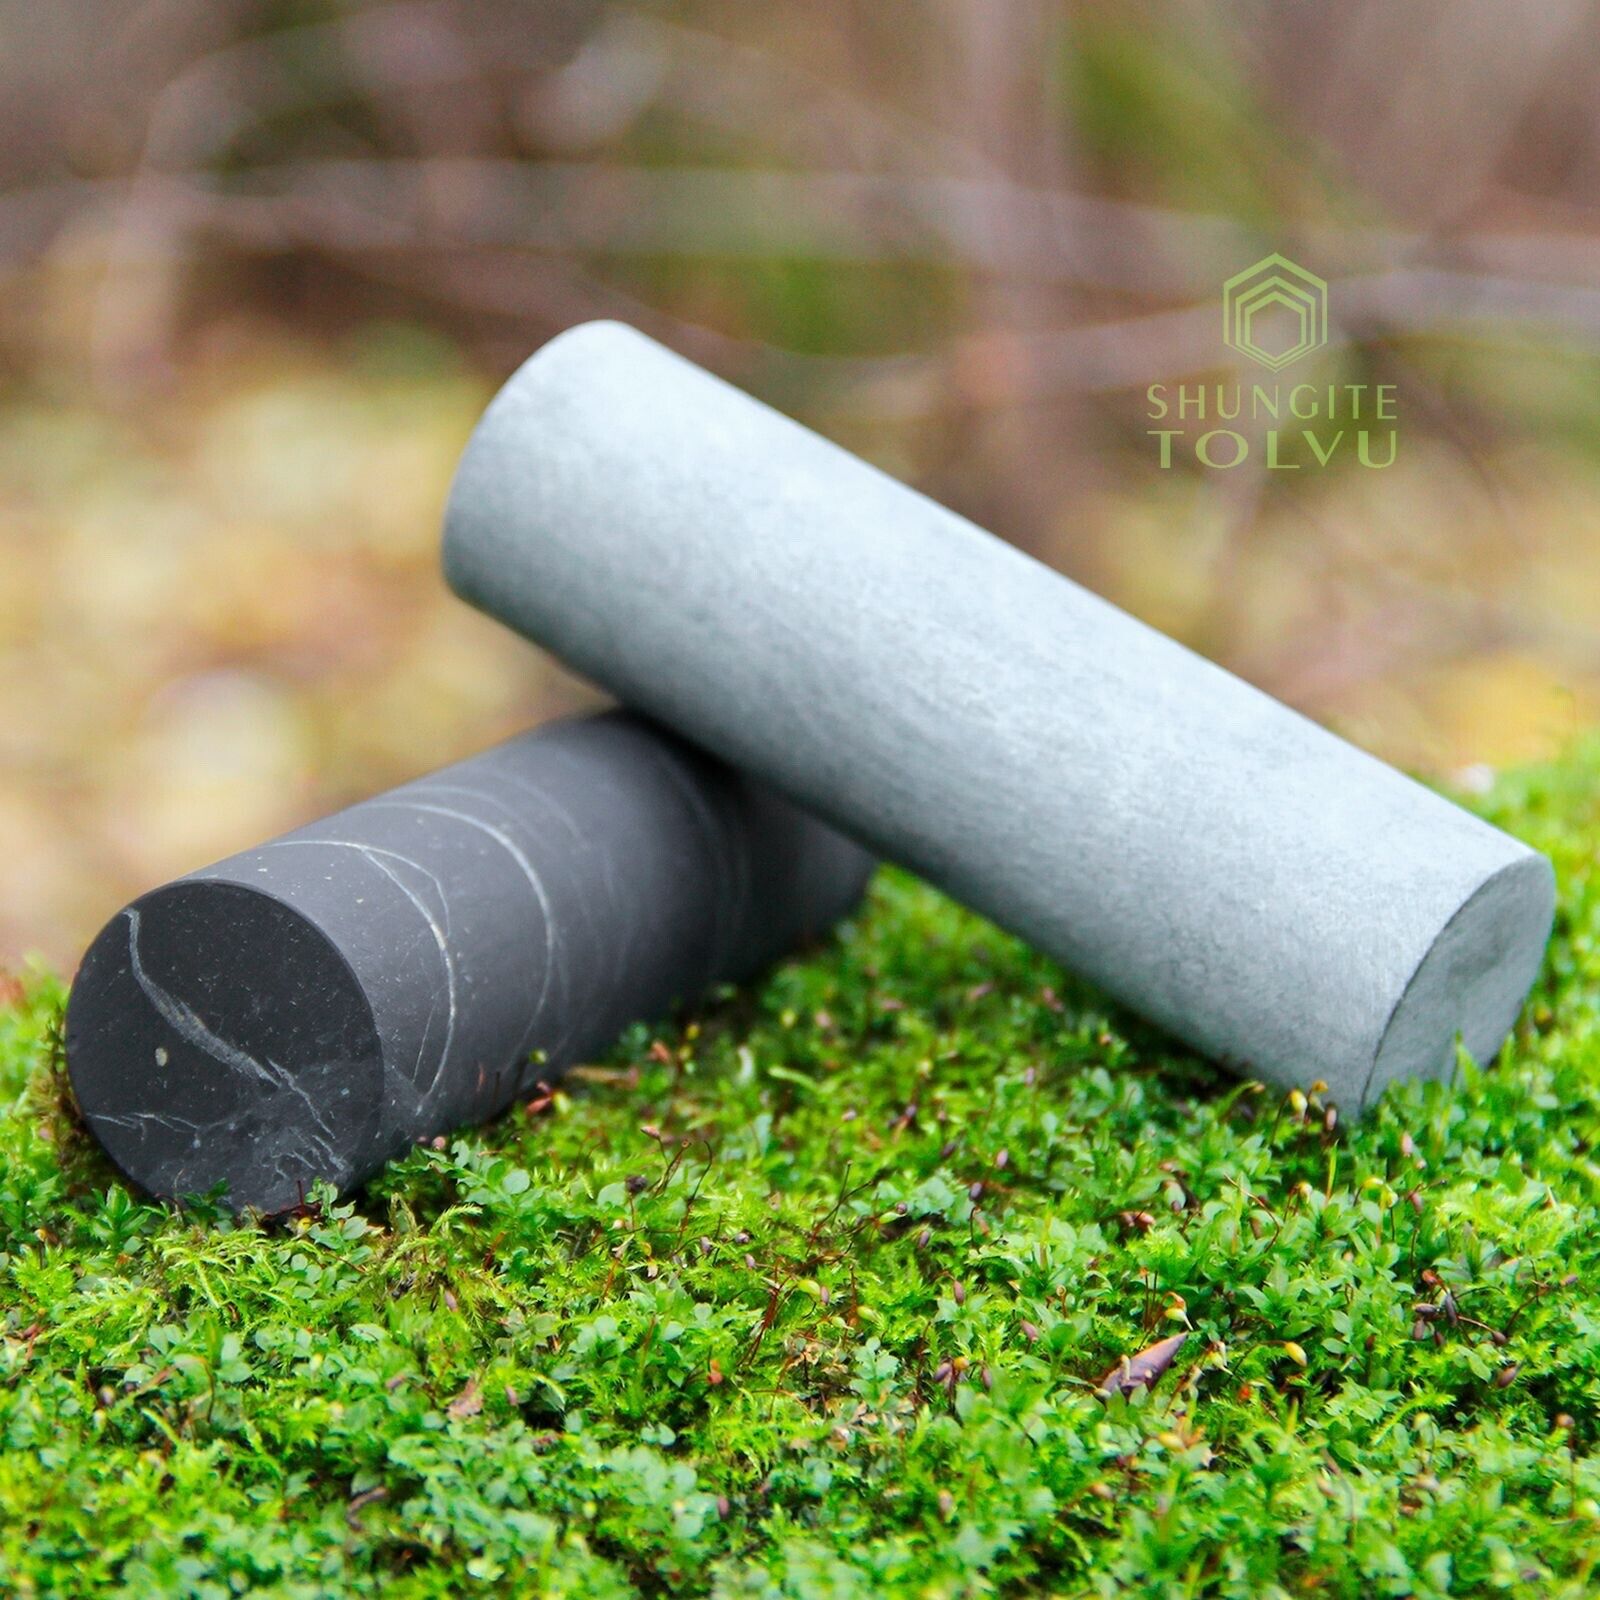 Shungite and Soapstone Cylinders for meditation Unpolished Natural stones, Tolvu